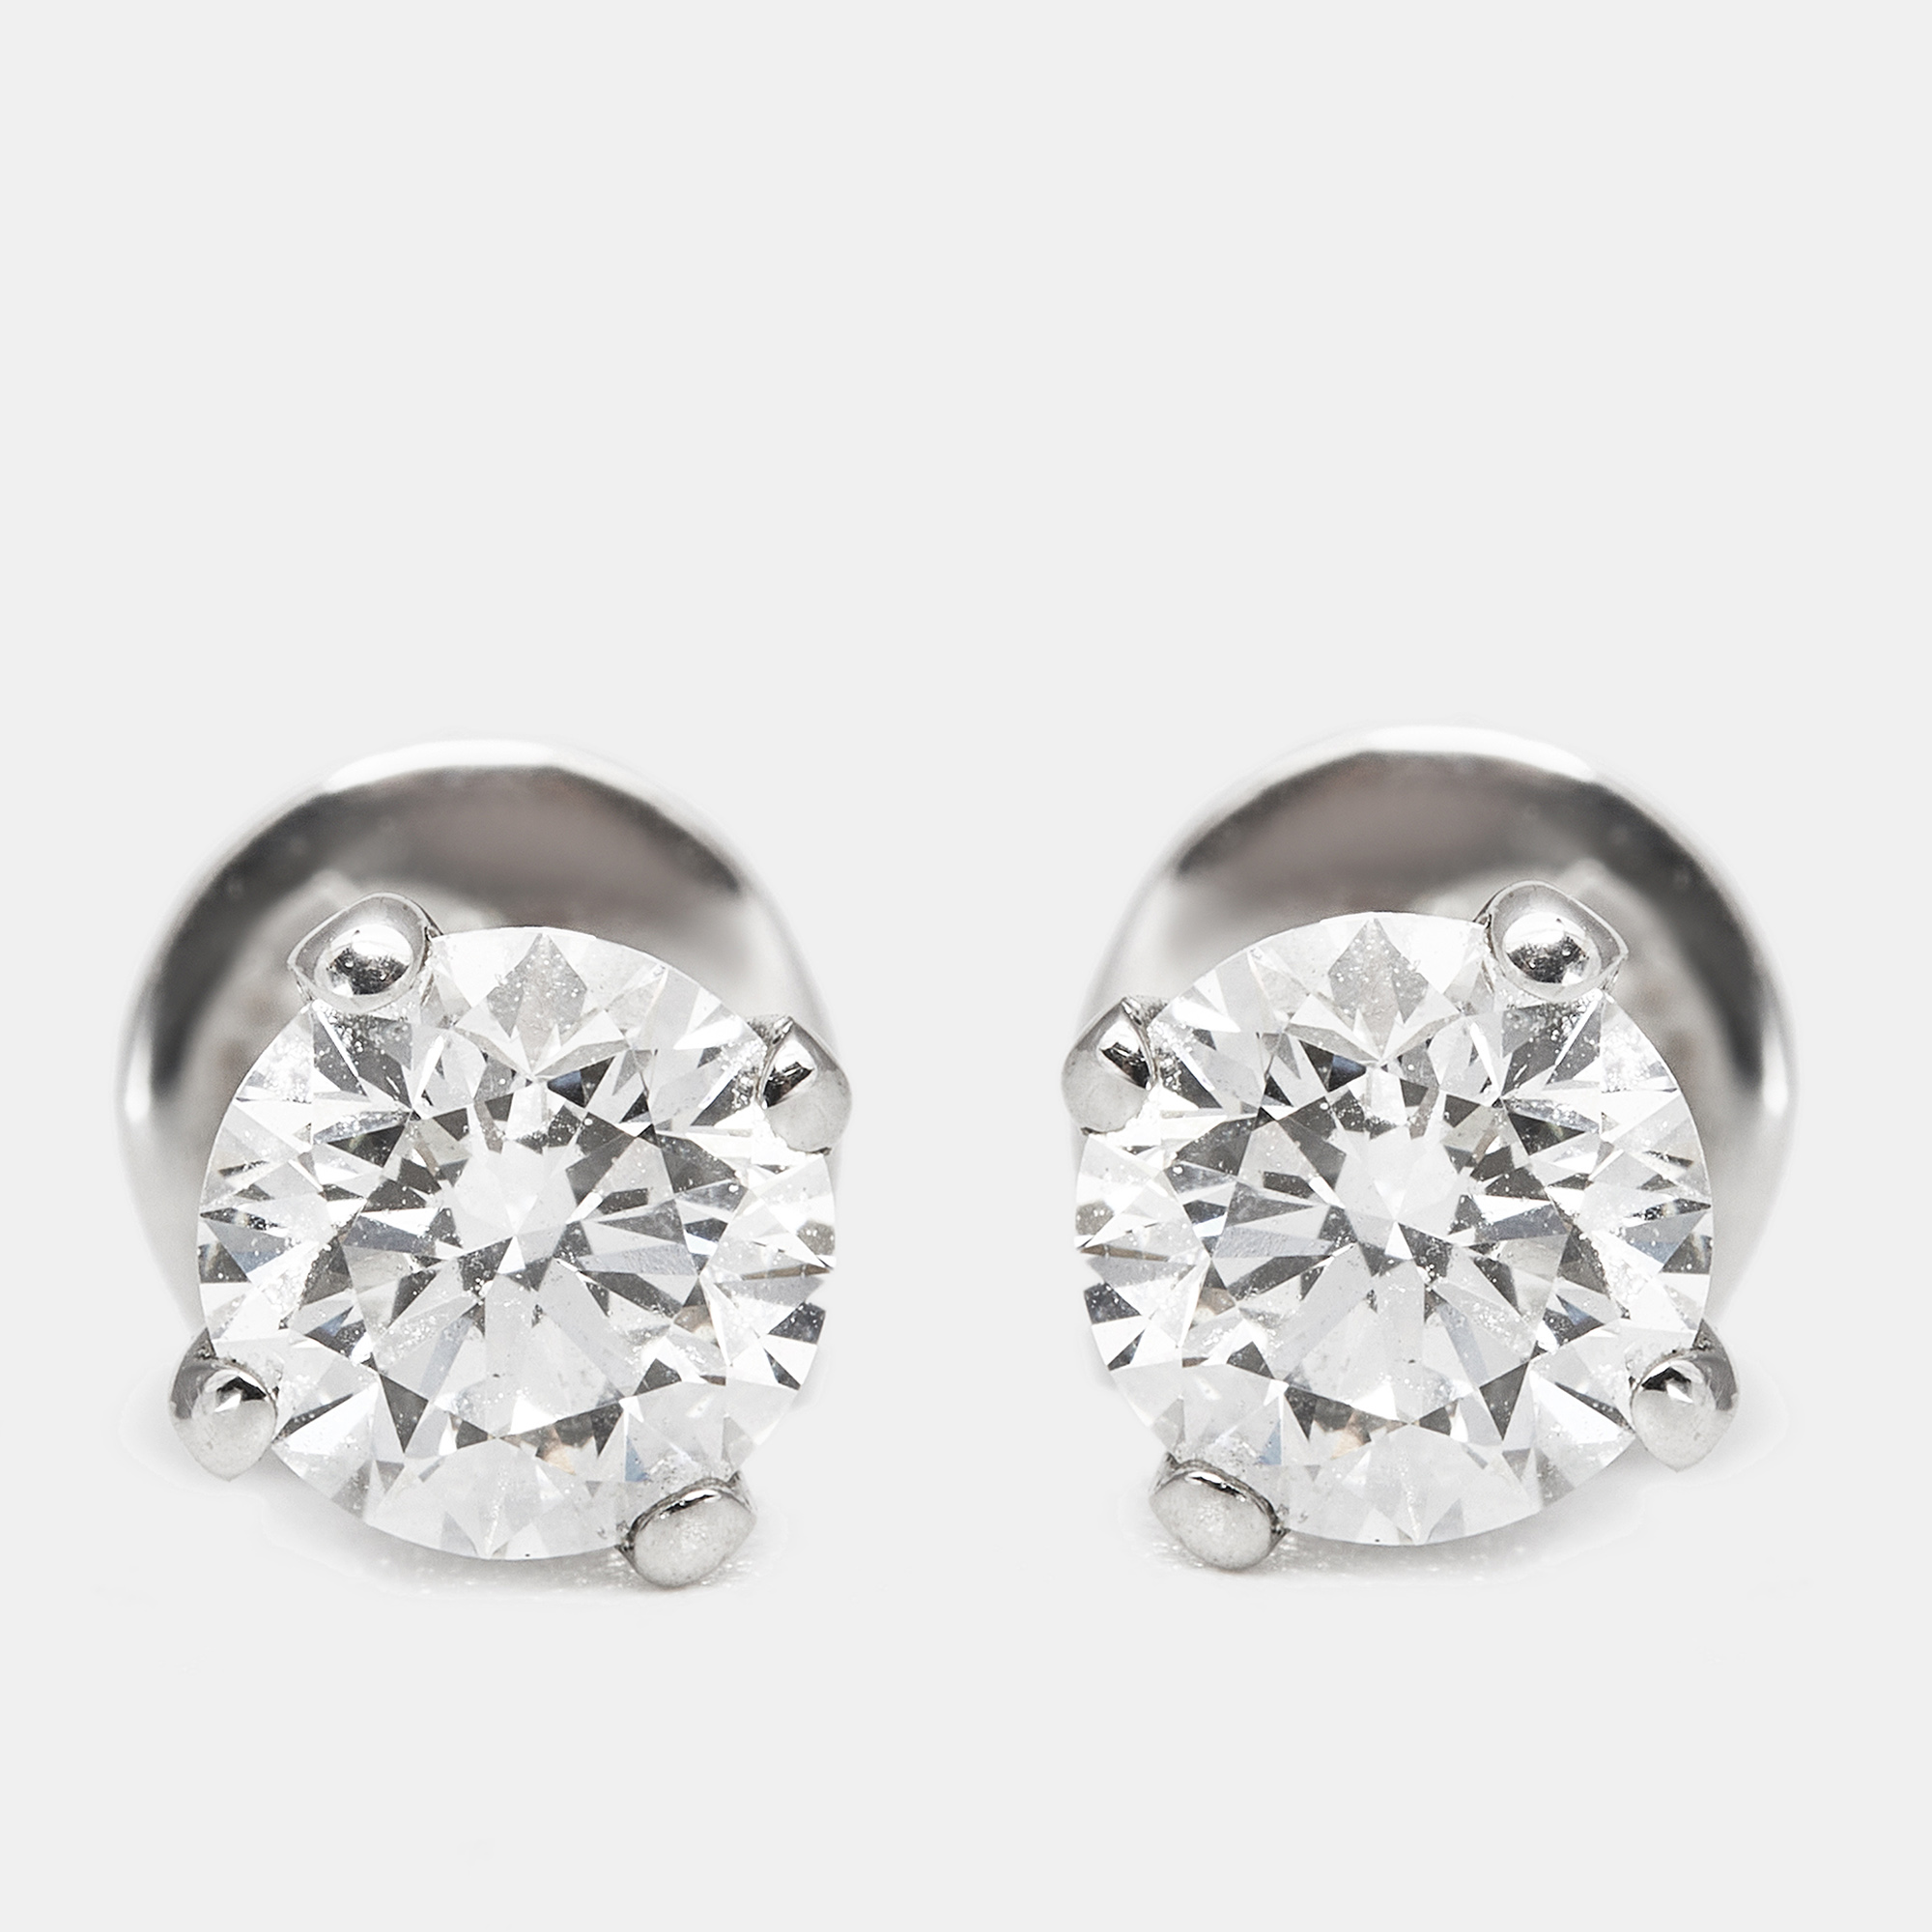 The diamond edit daily wear elegant solitaire diamonds (0.65 ct) 18k white gold stud earrings